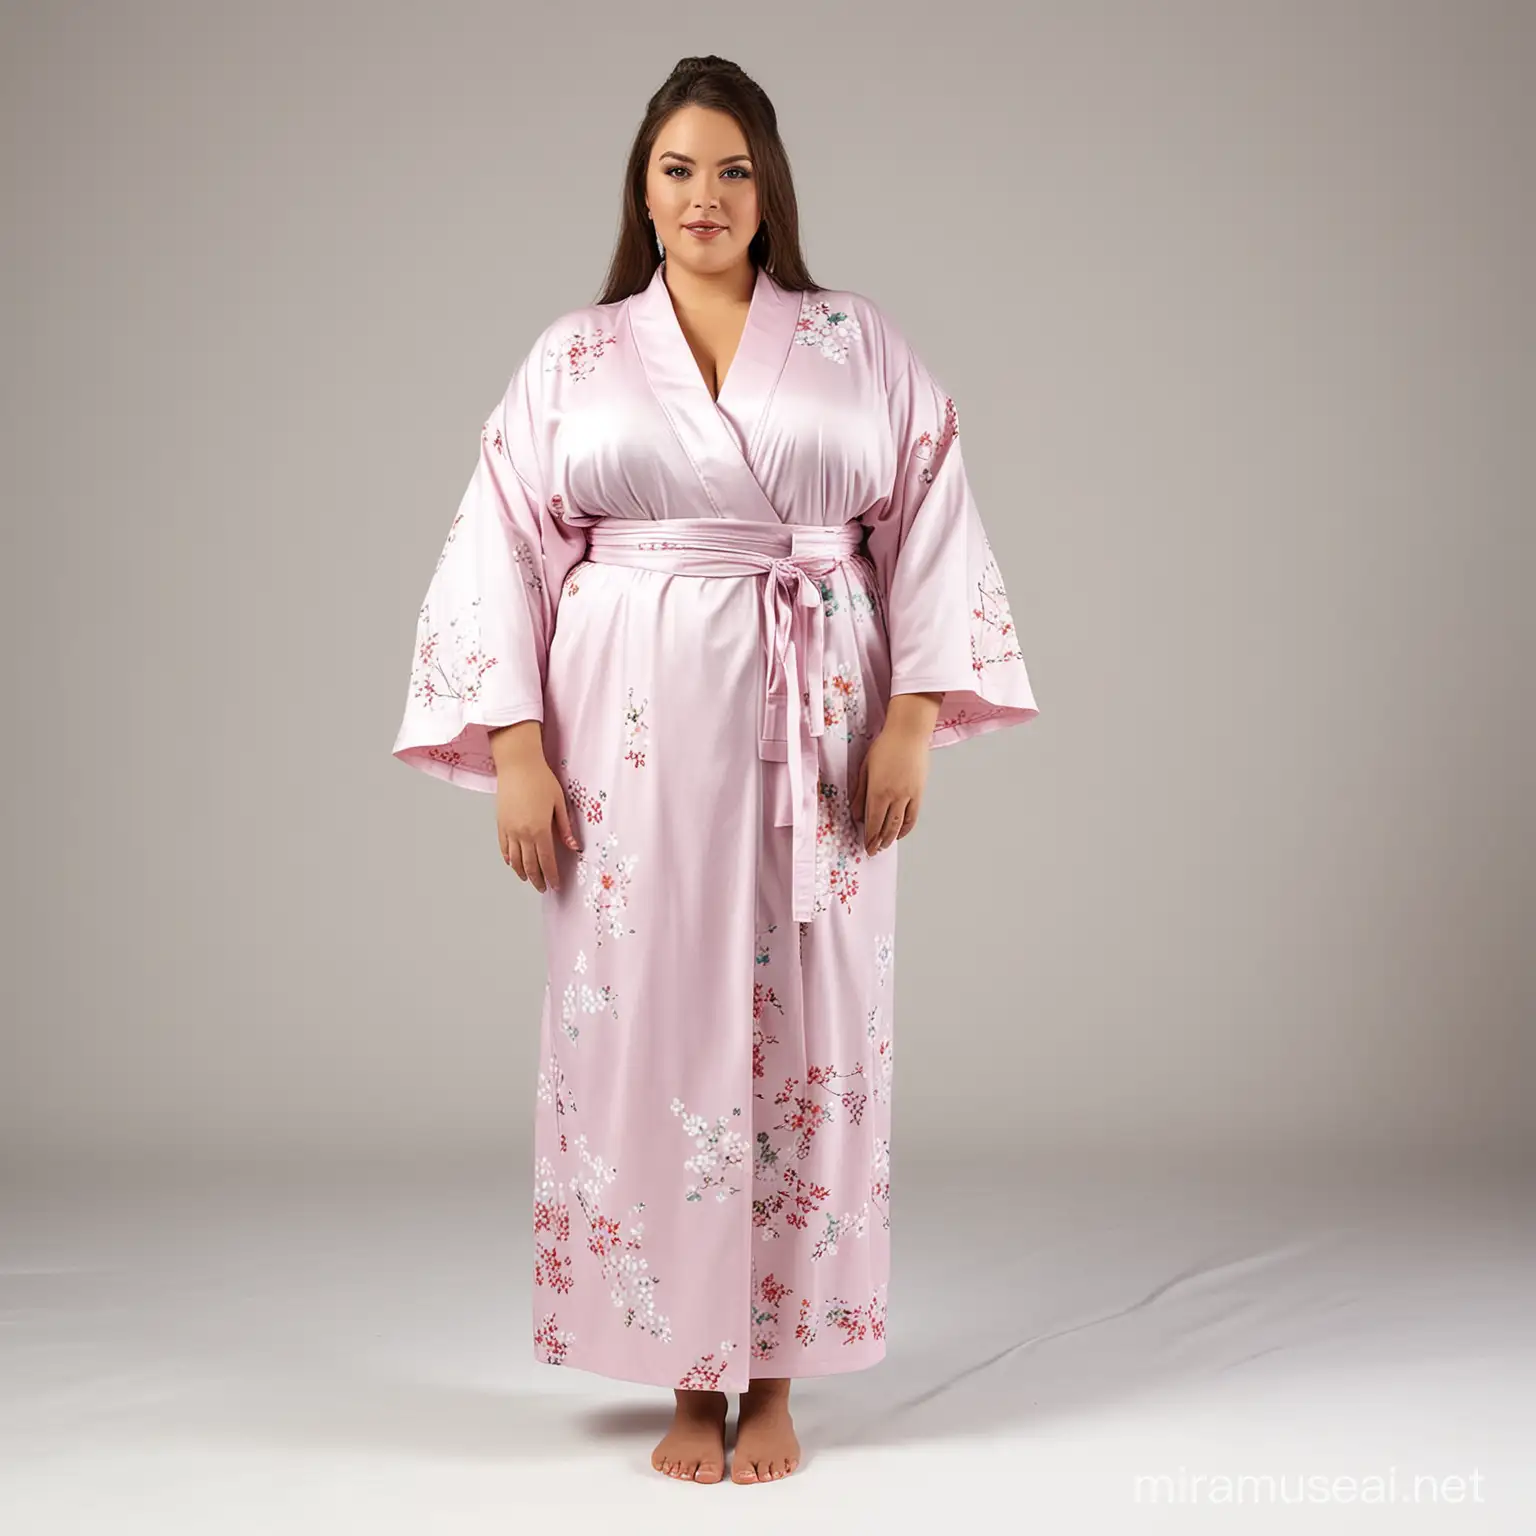 BBW in plain kimono full body.